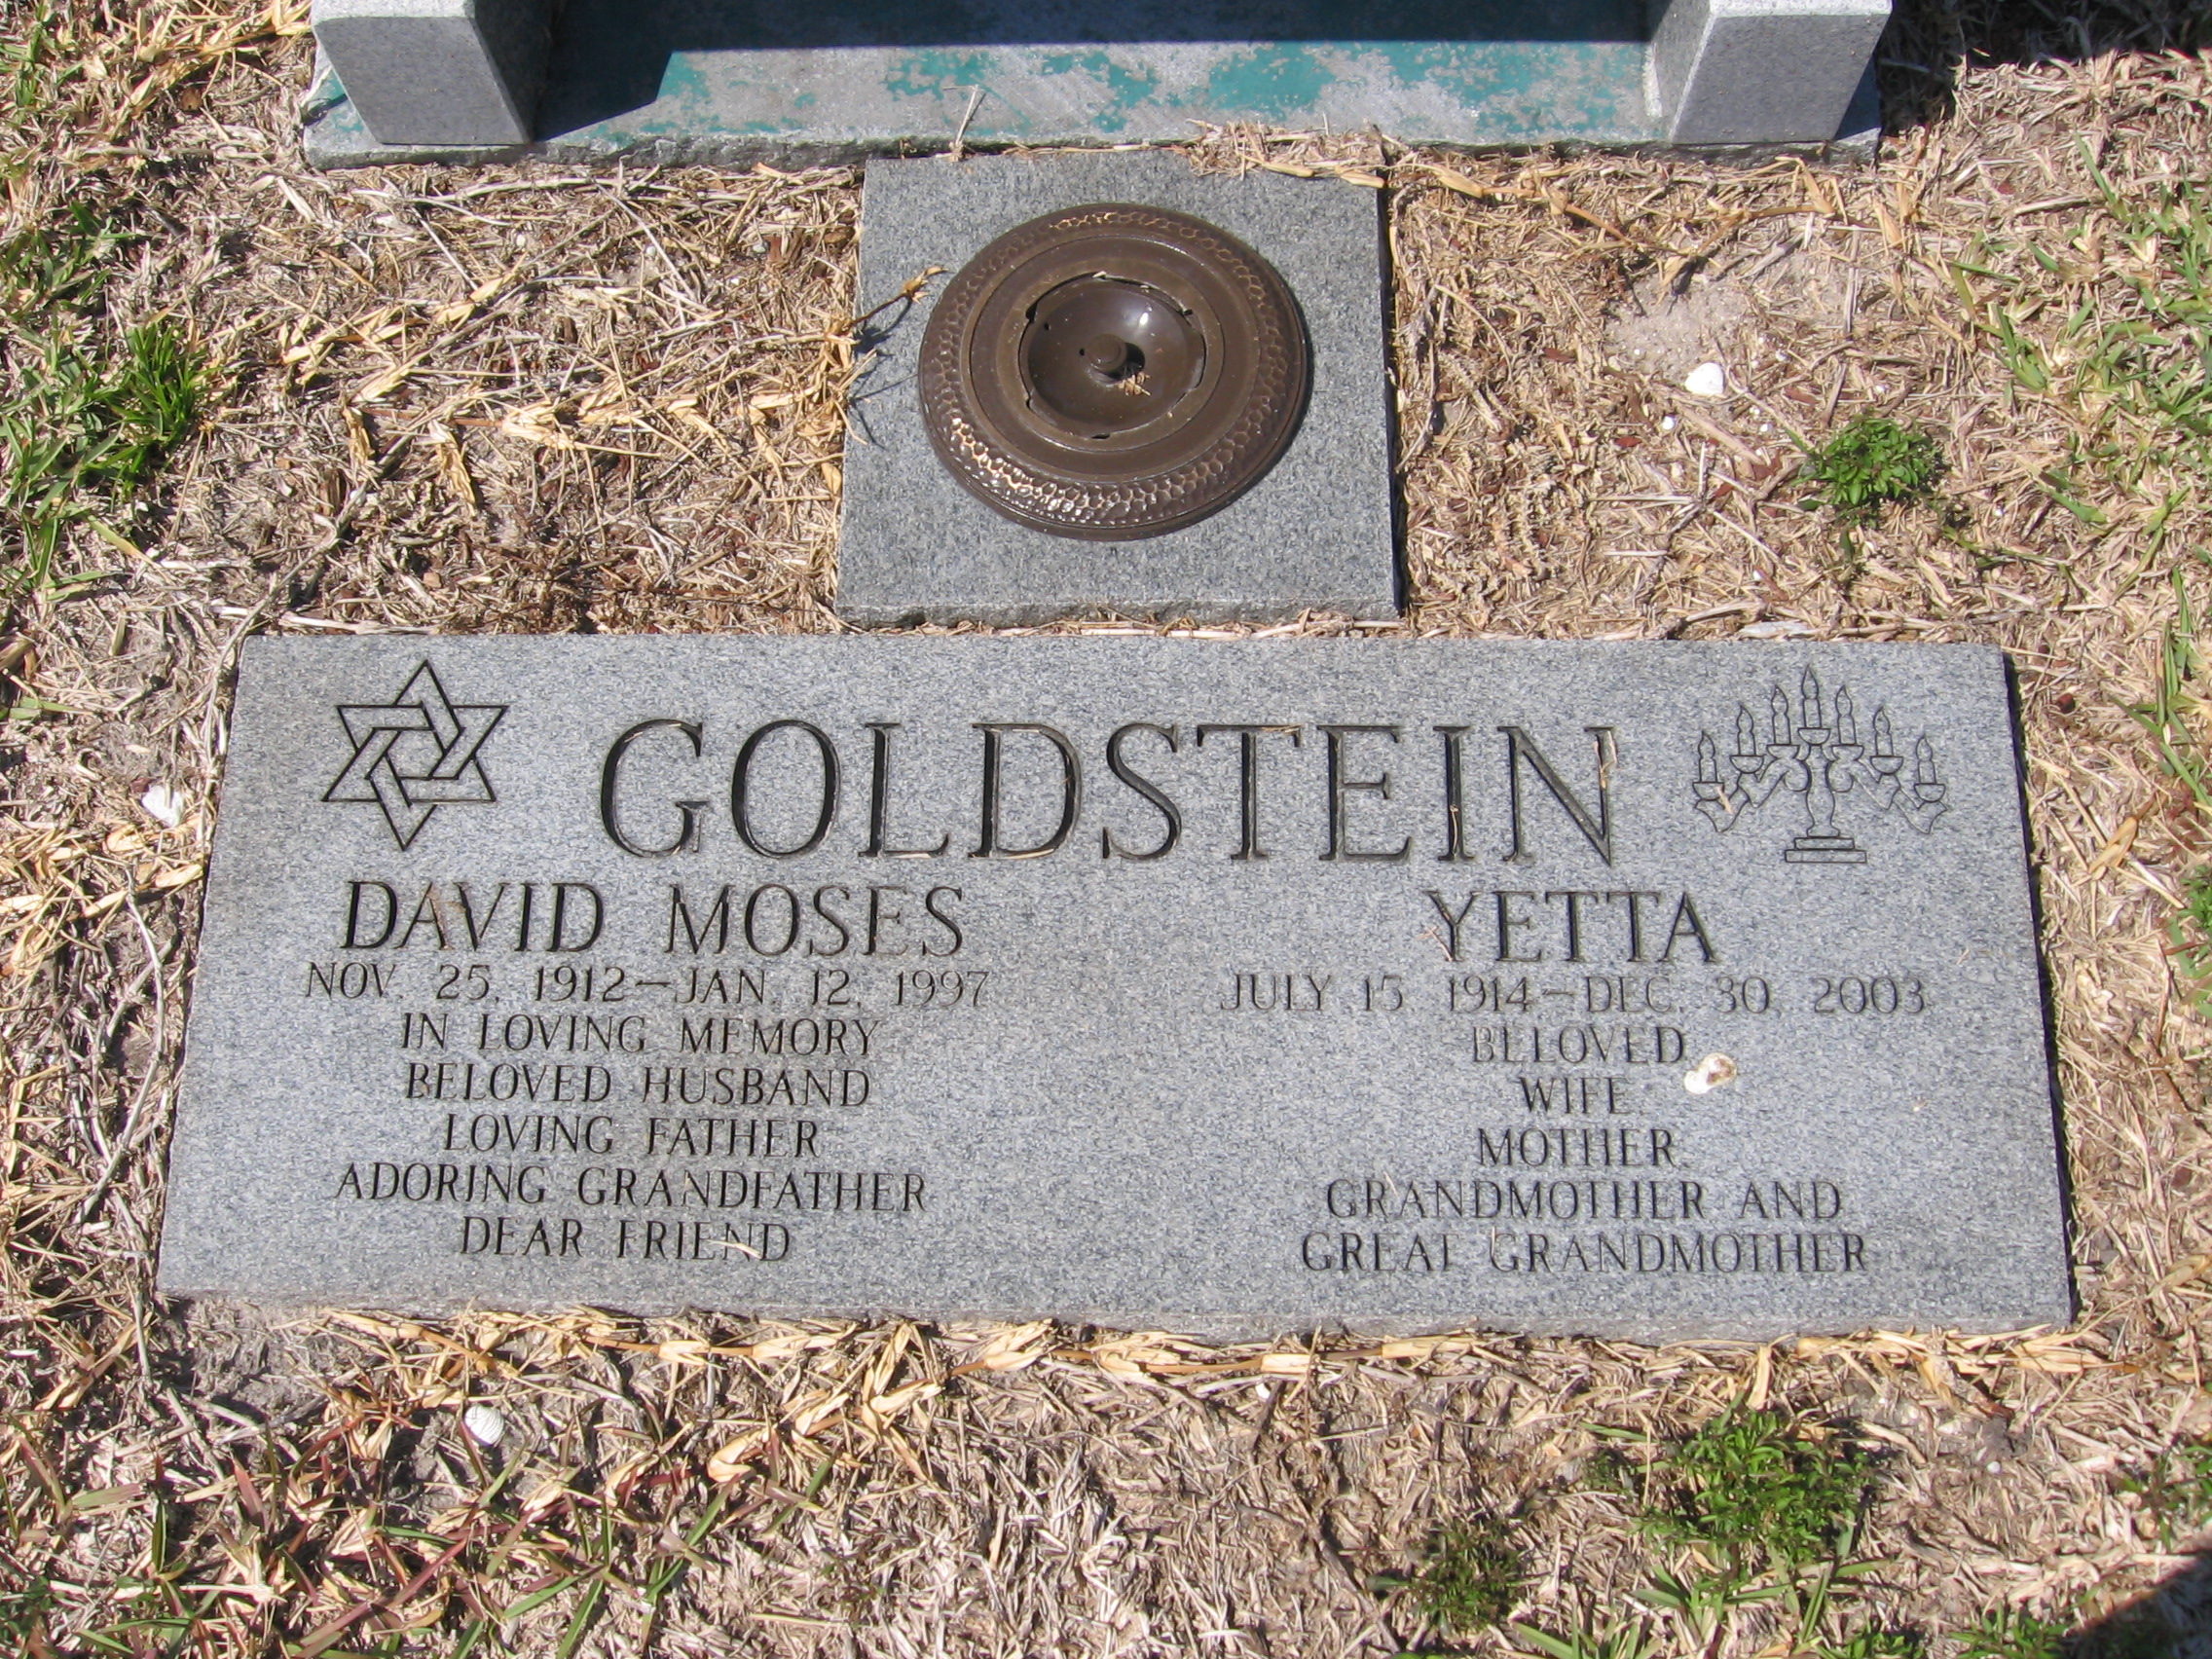 David Moses Goldstein